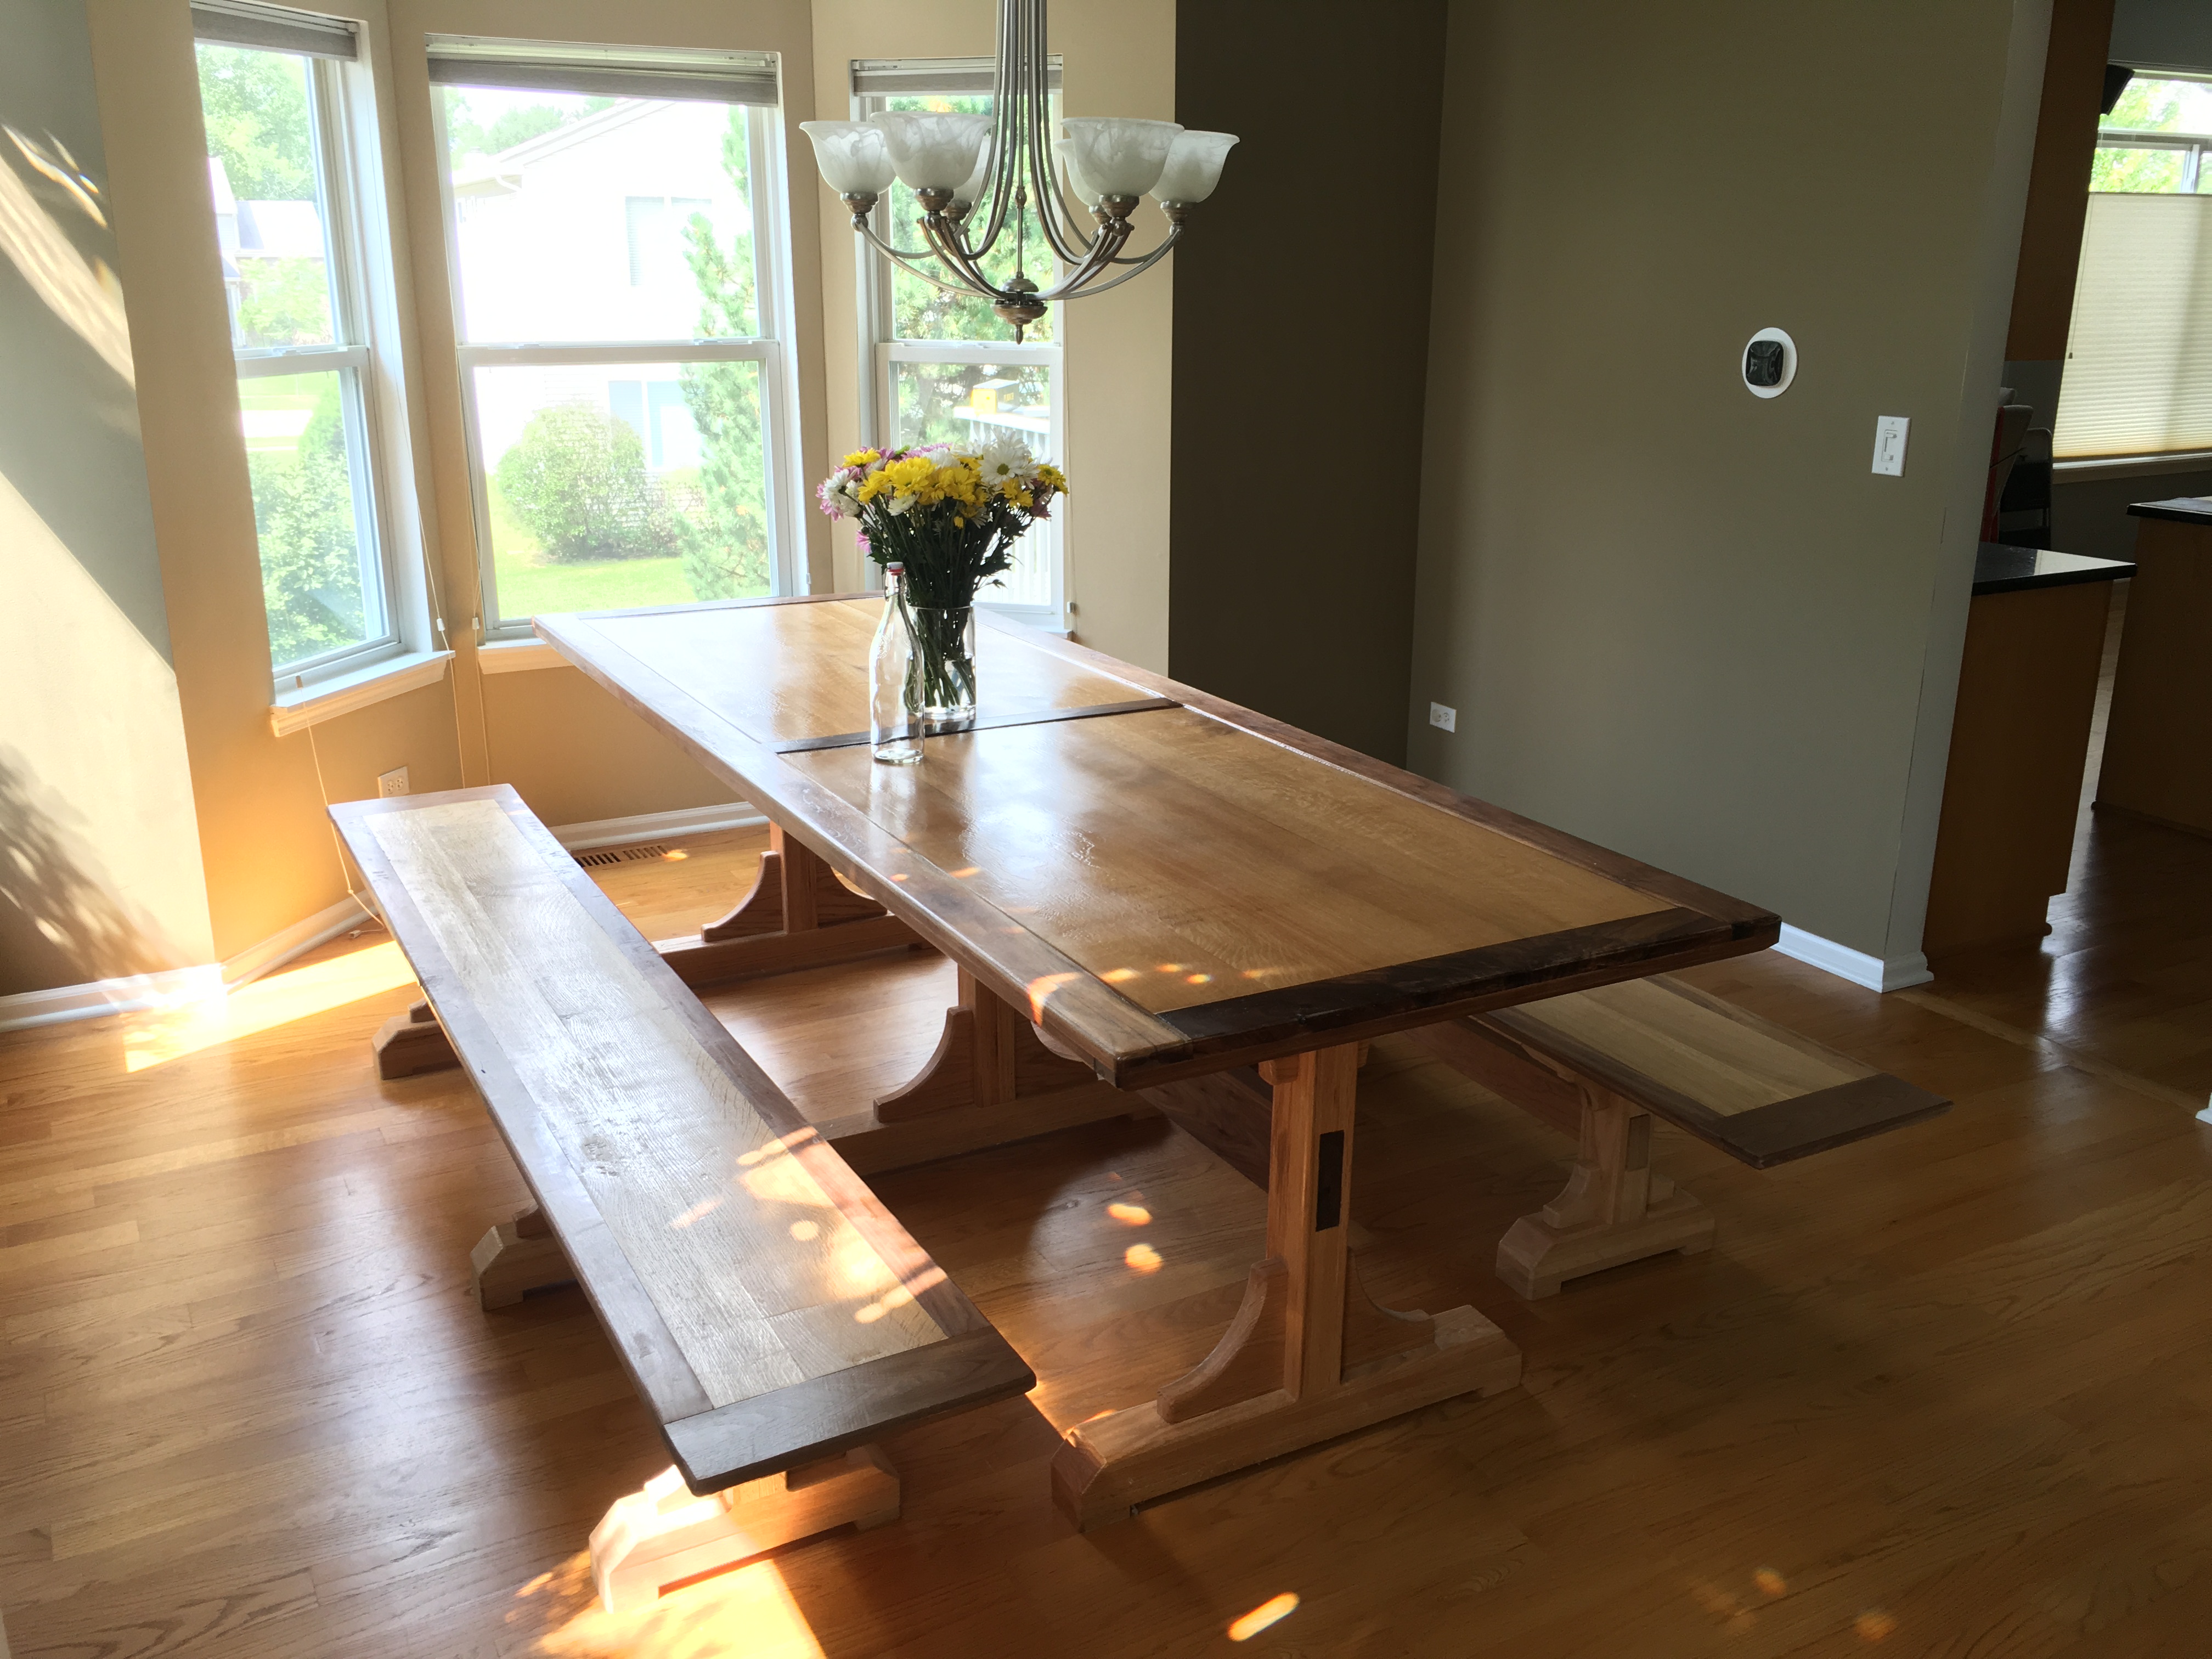 Studio82 Build Farmhouse Table With Quartersawn White Oak And